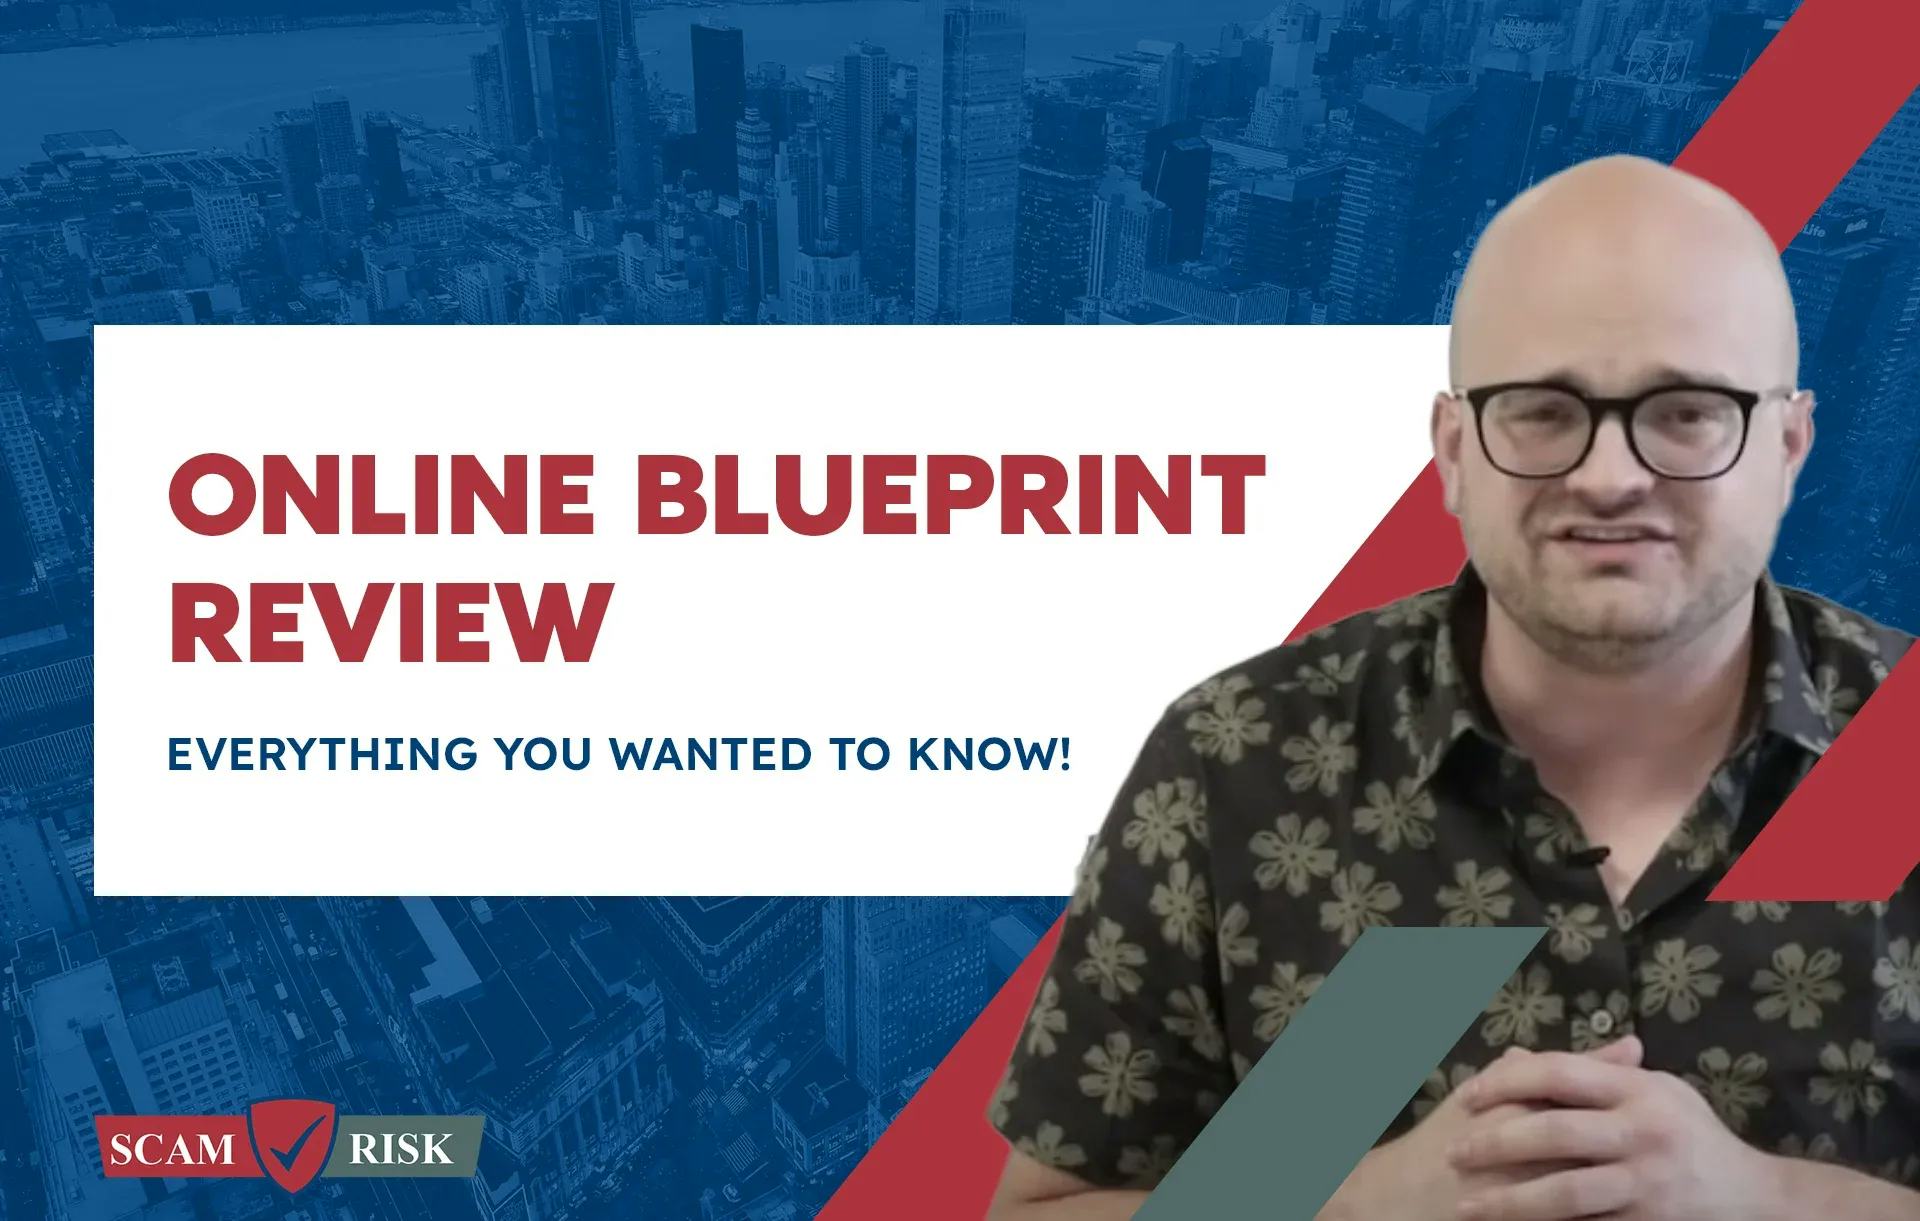 Is Online Blueprint Legit?